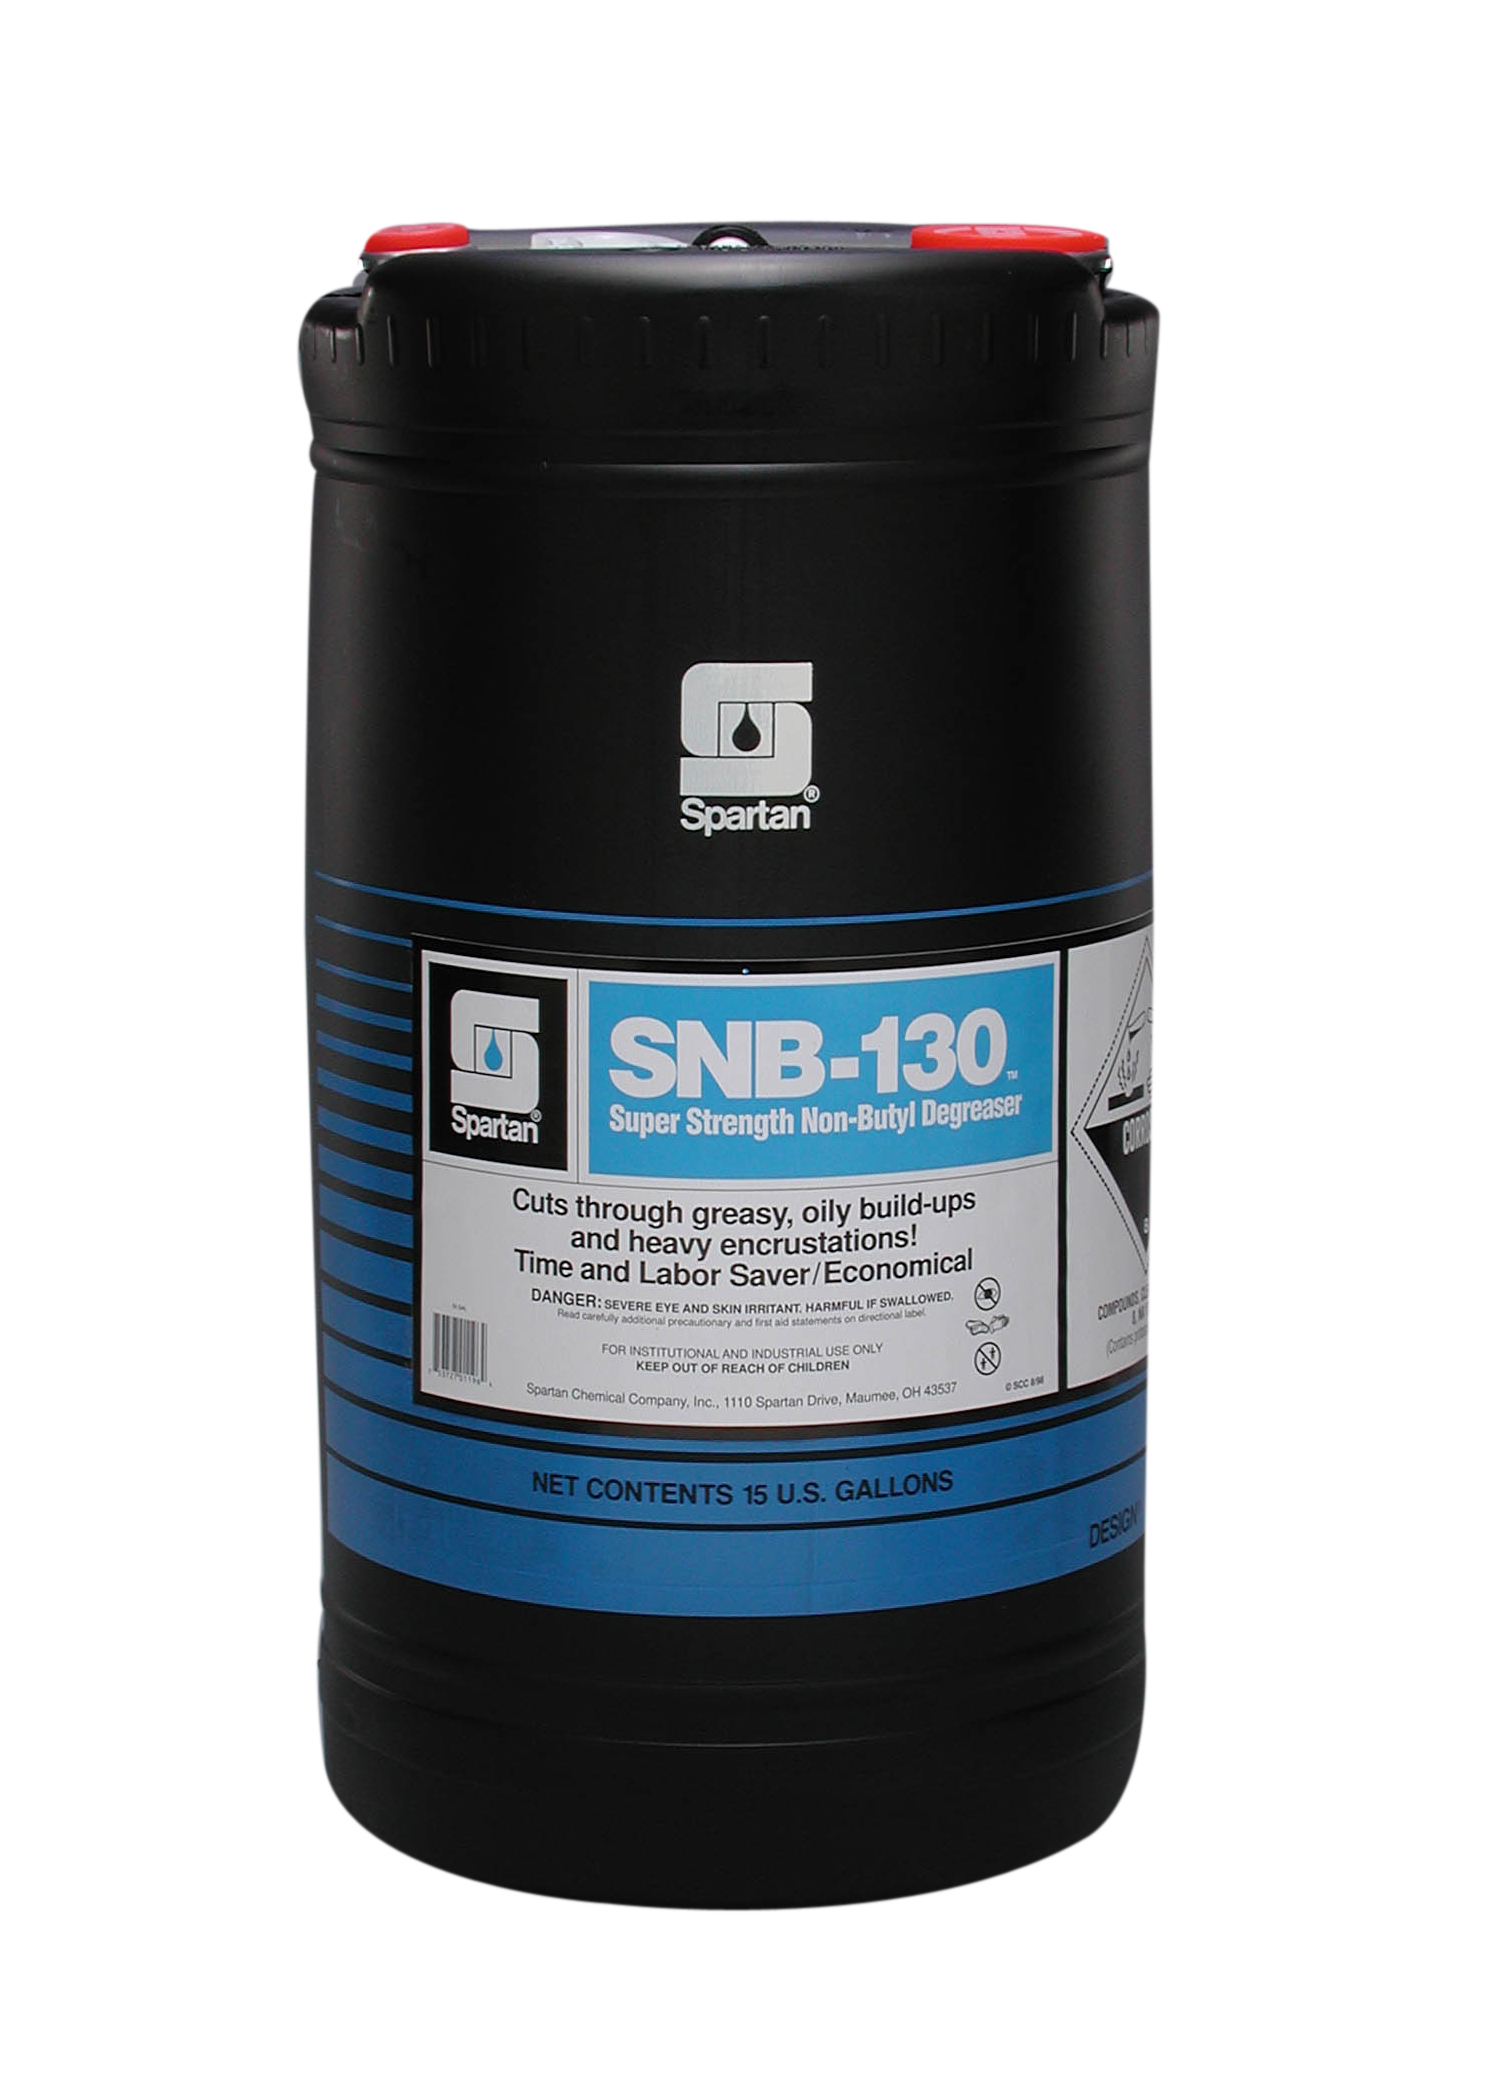 SNB-130® 15 gallon drum